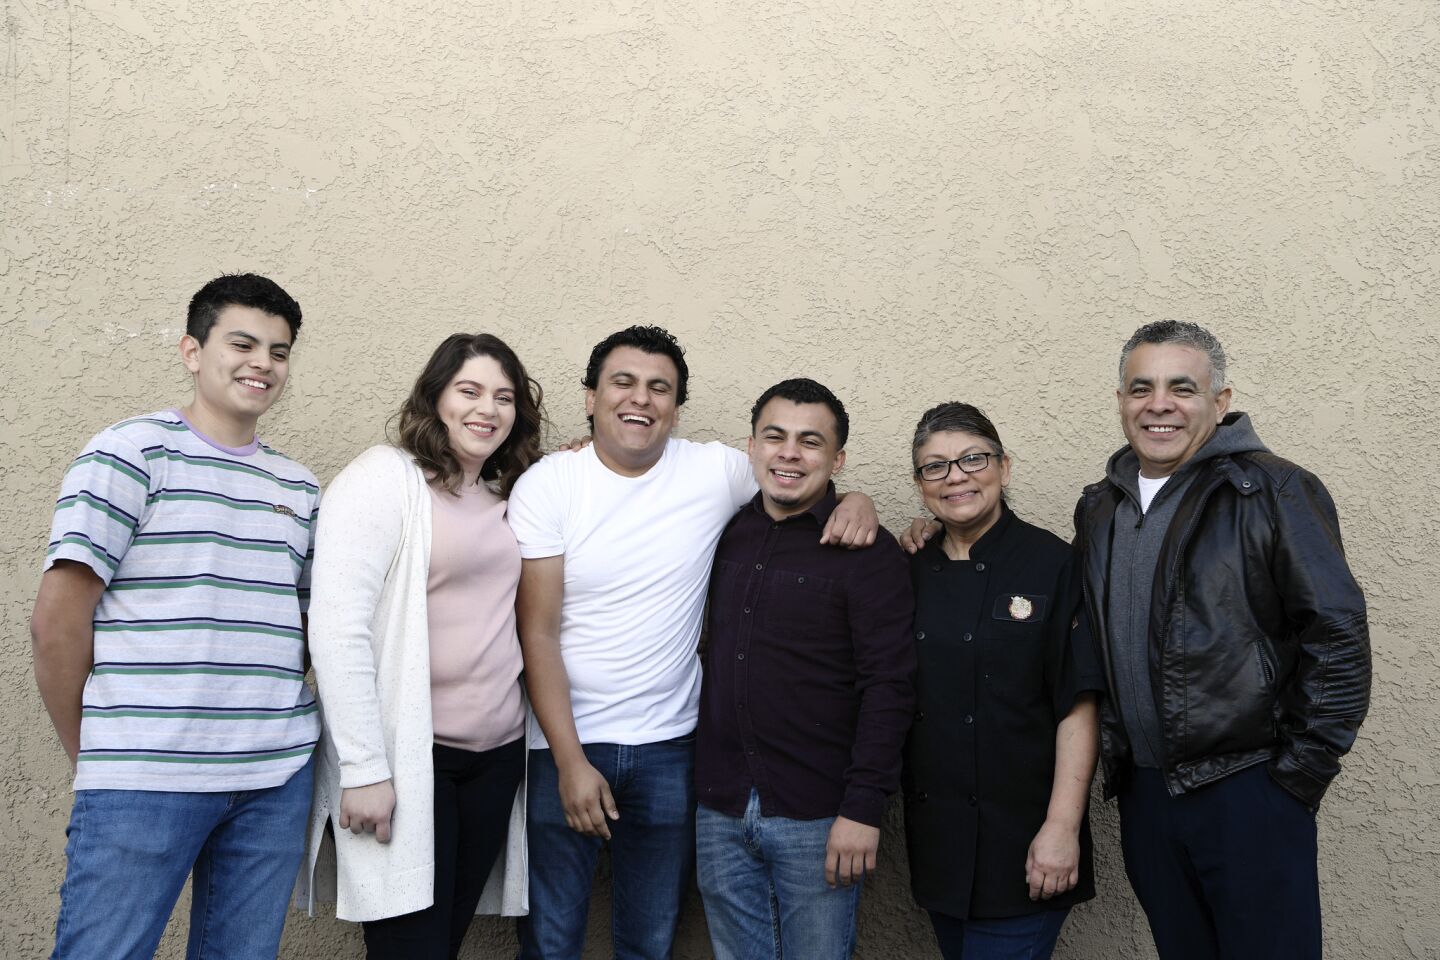 Pablo Villegas, left, Guadalupe Navarro, Erick Villegas, Anny Villegas, Maria Villegas and Jose Villegas at their Fonda Mixcoac restaurant in Anaheim.